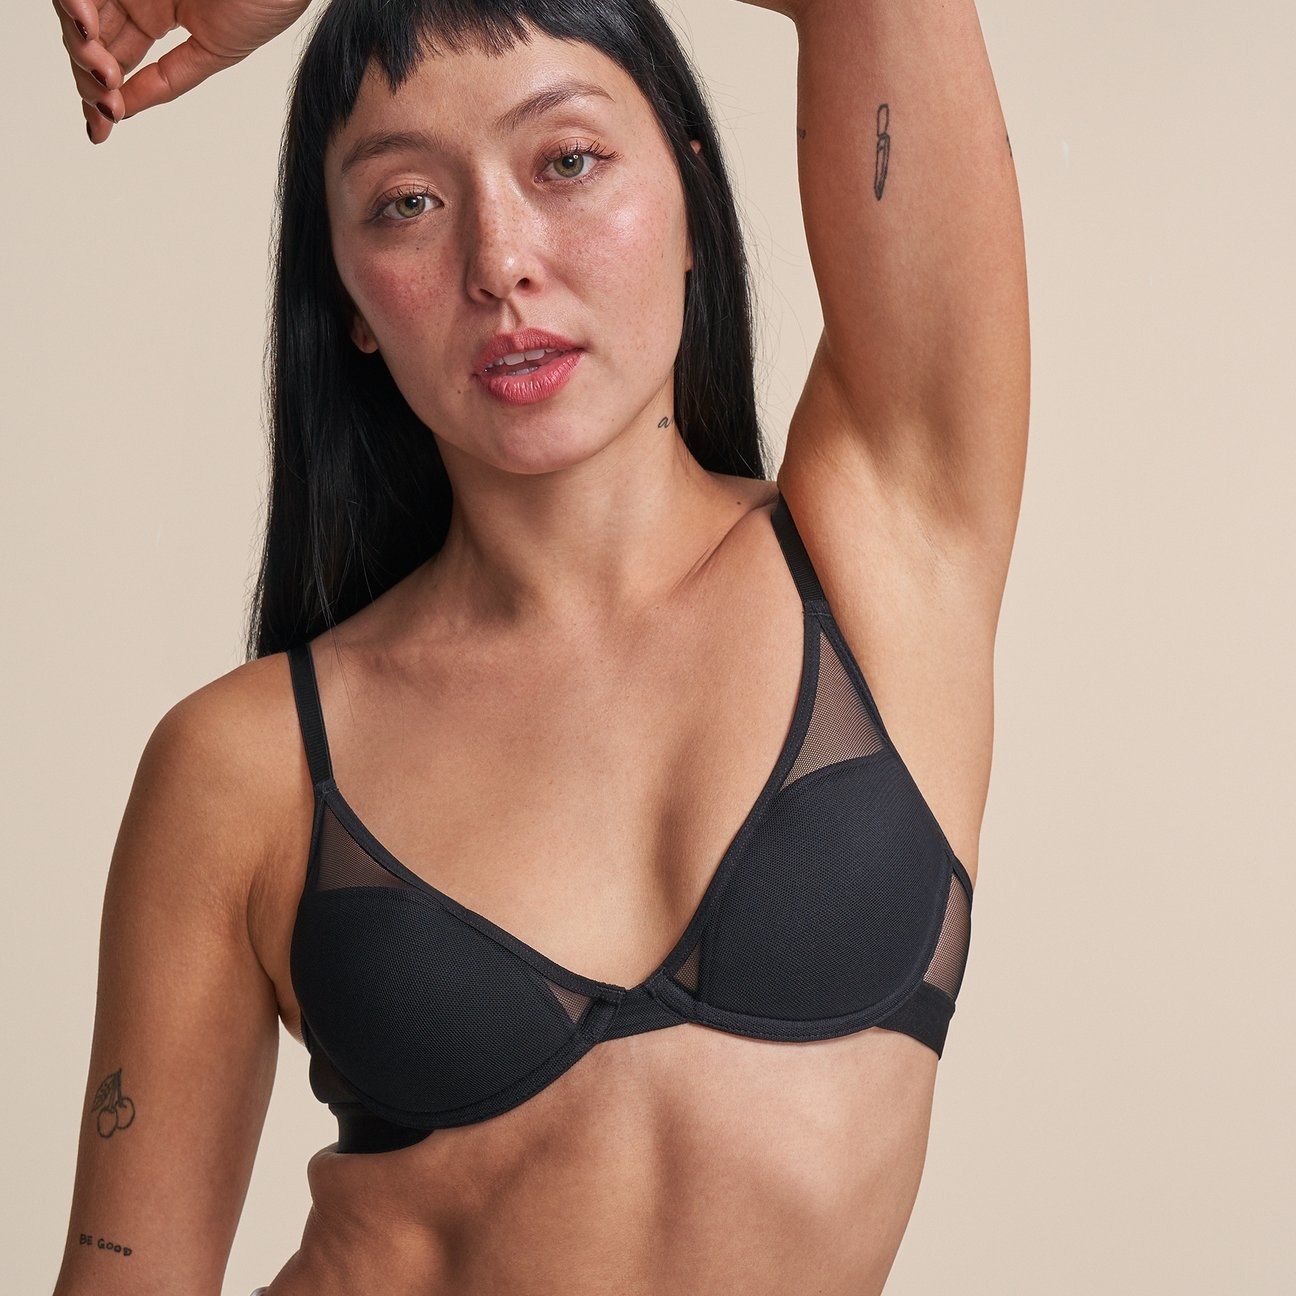 model wearing the black bra with mesh panels in it